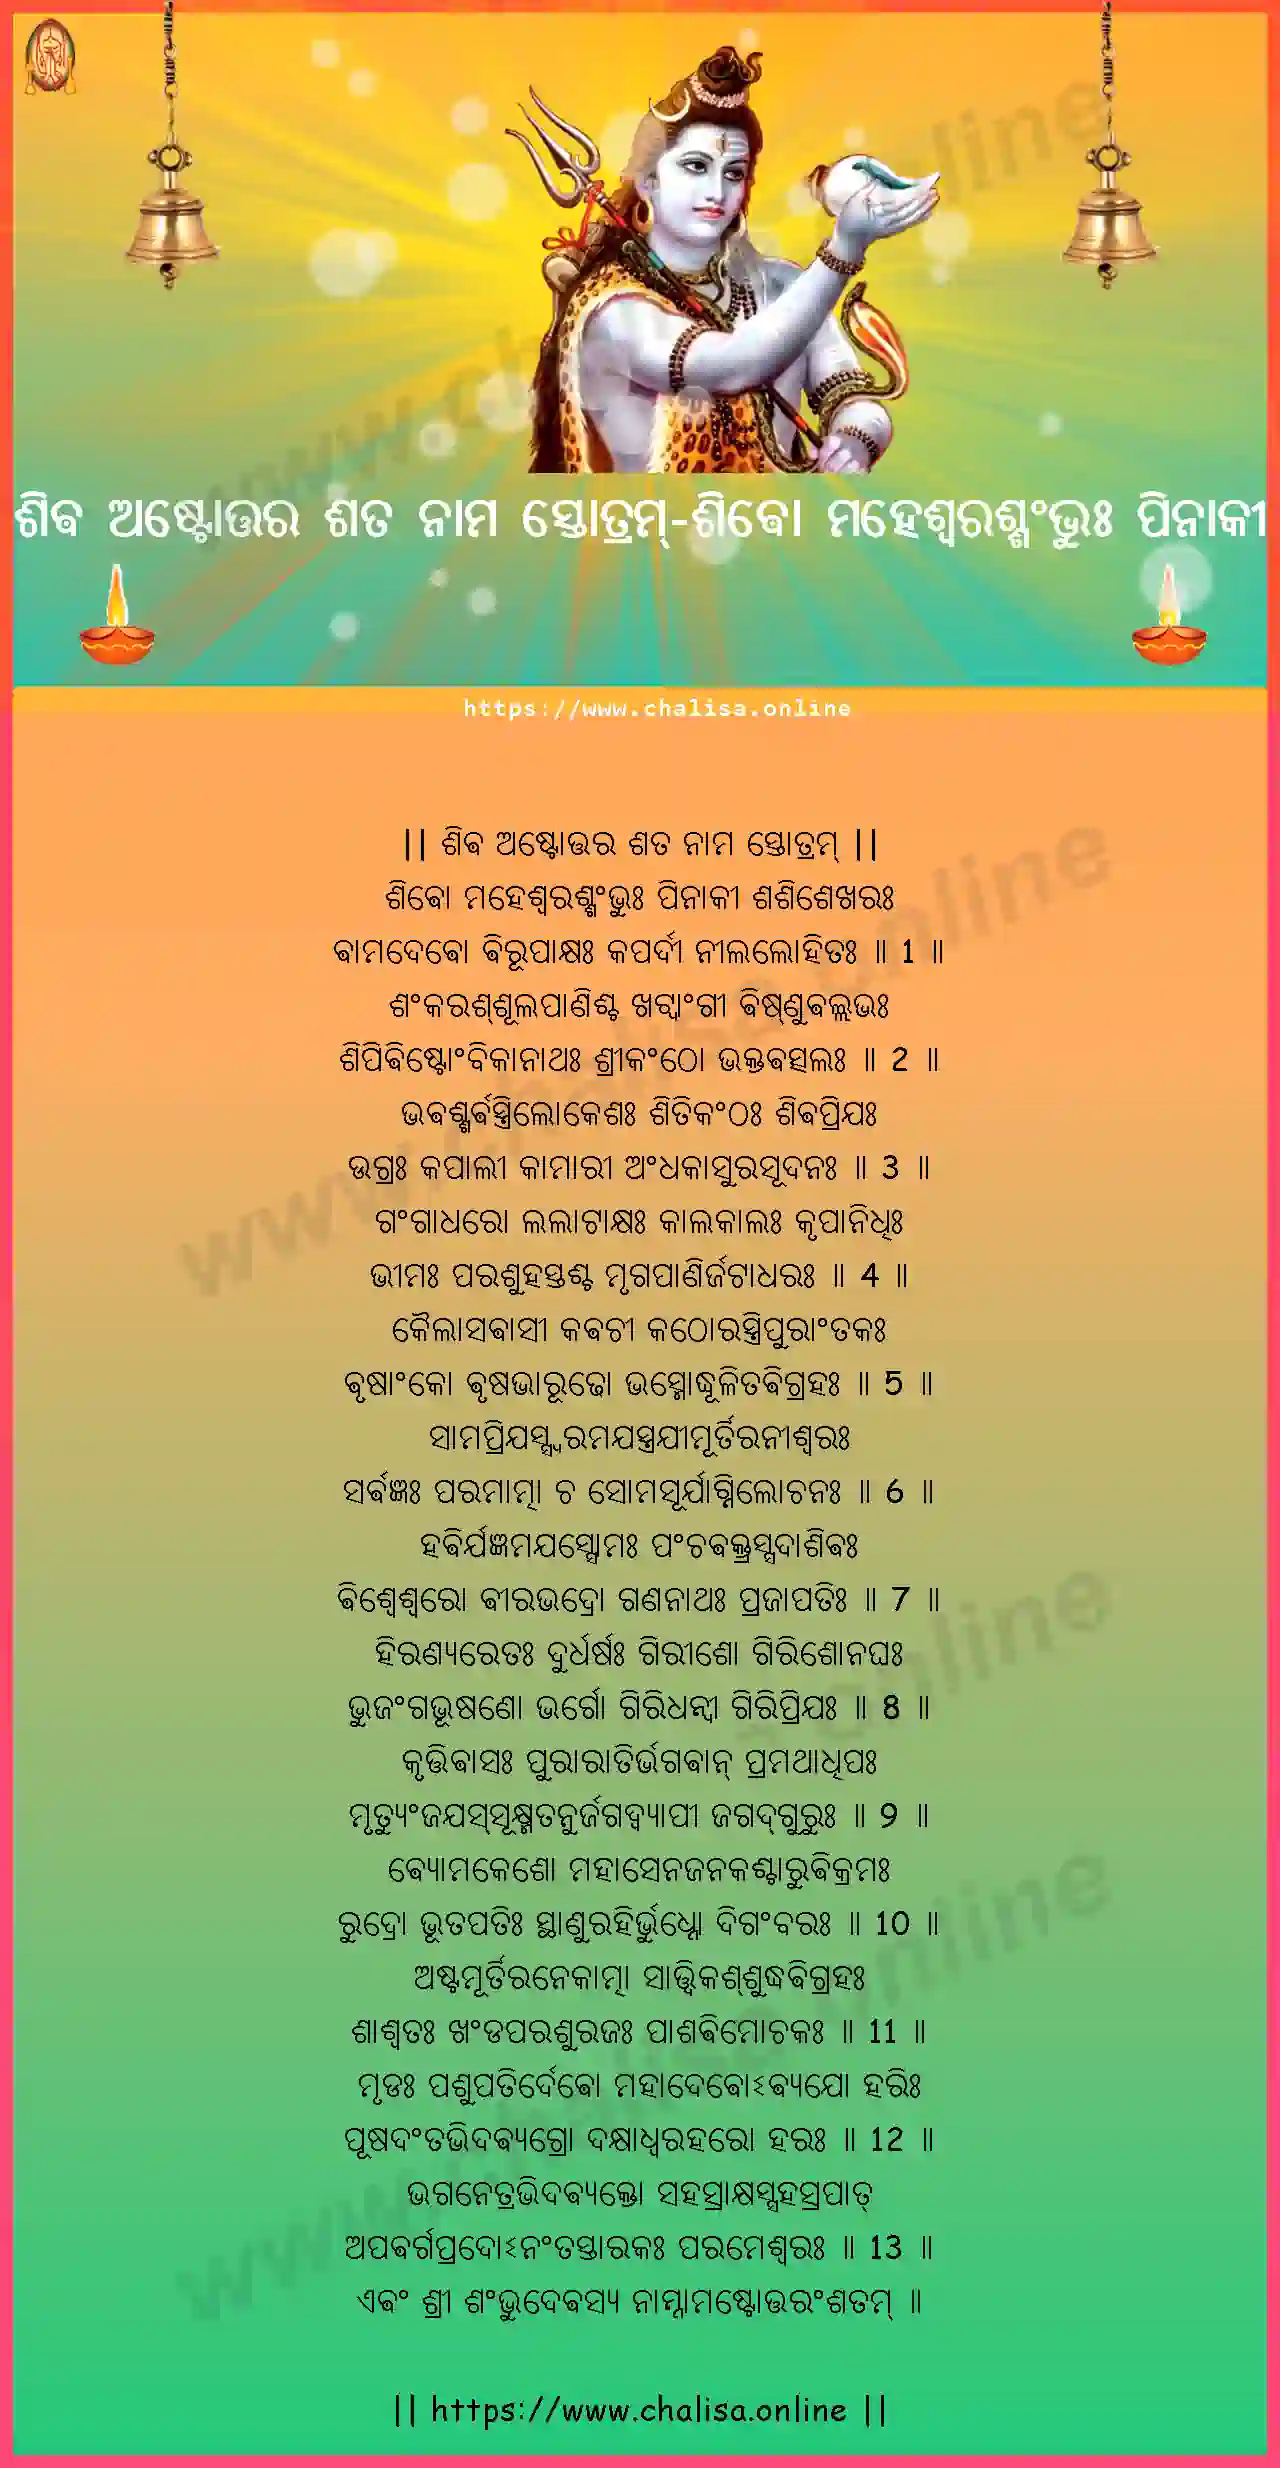 sivo-mahesvarassambhuh-shiva-ashtottara-sata-nama-stotram-oriya-oriya-lyrics-download